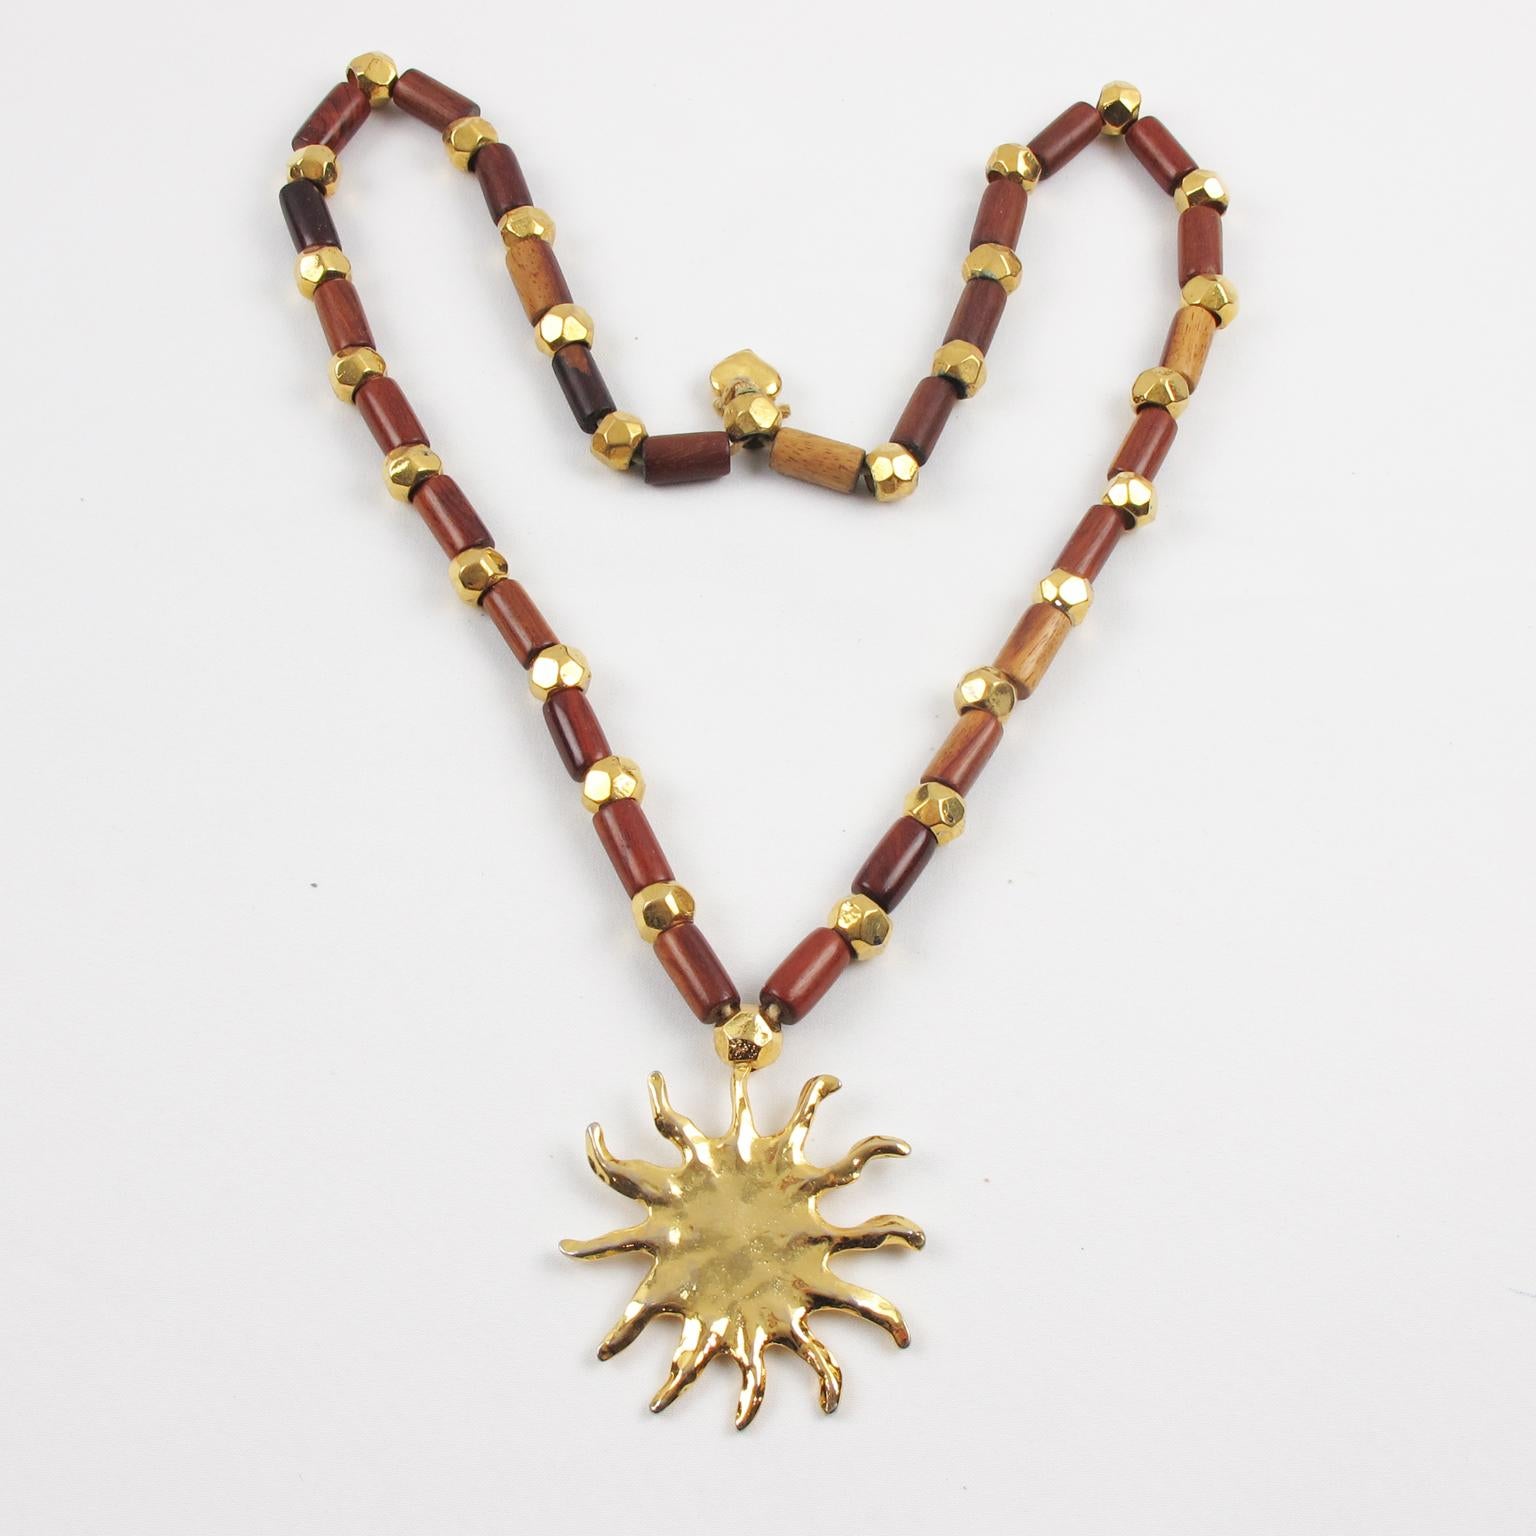 Modernist Edouard Rambaud Gilt Metal and Wood Necklace with Sun Pendant